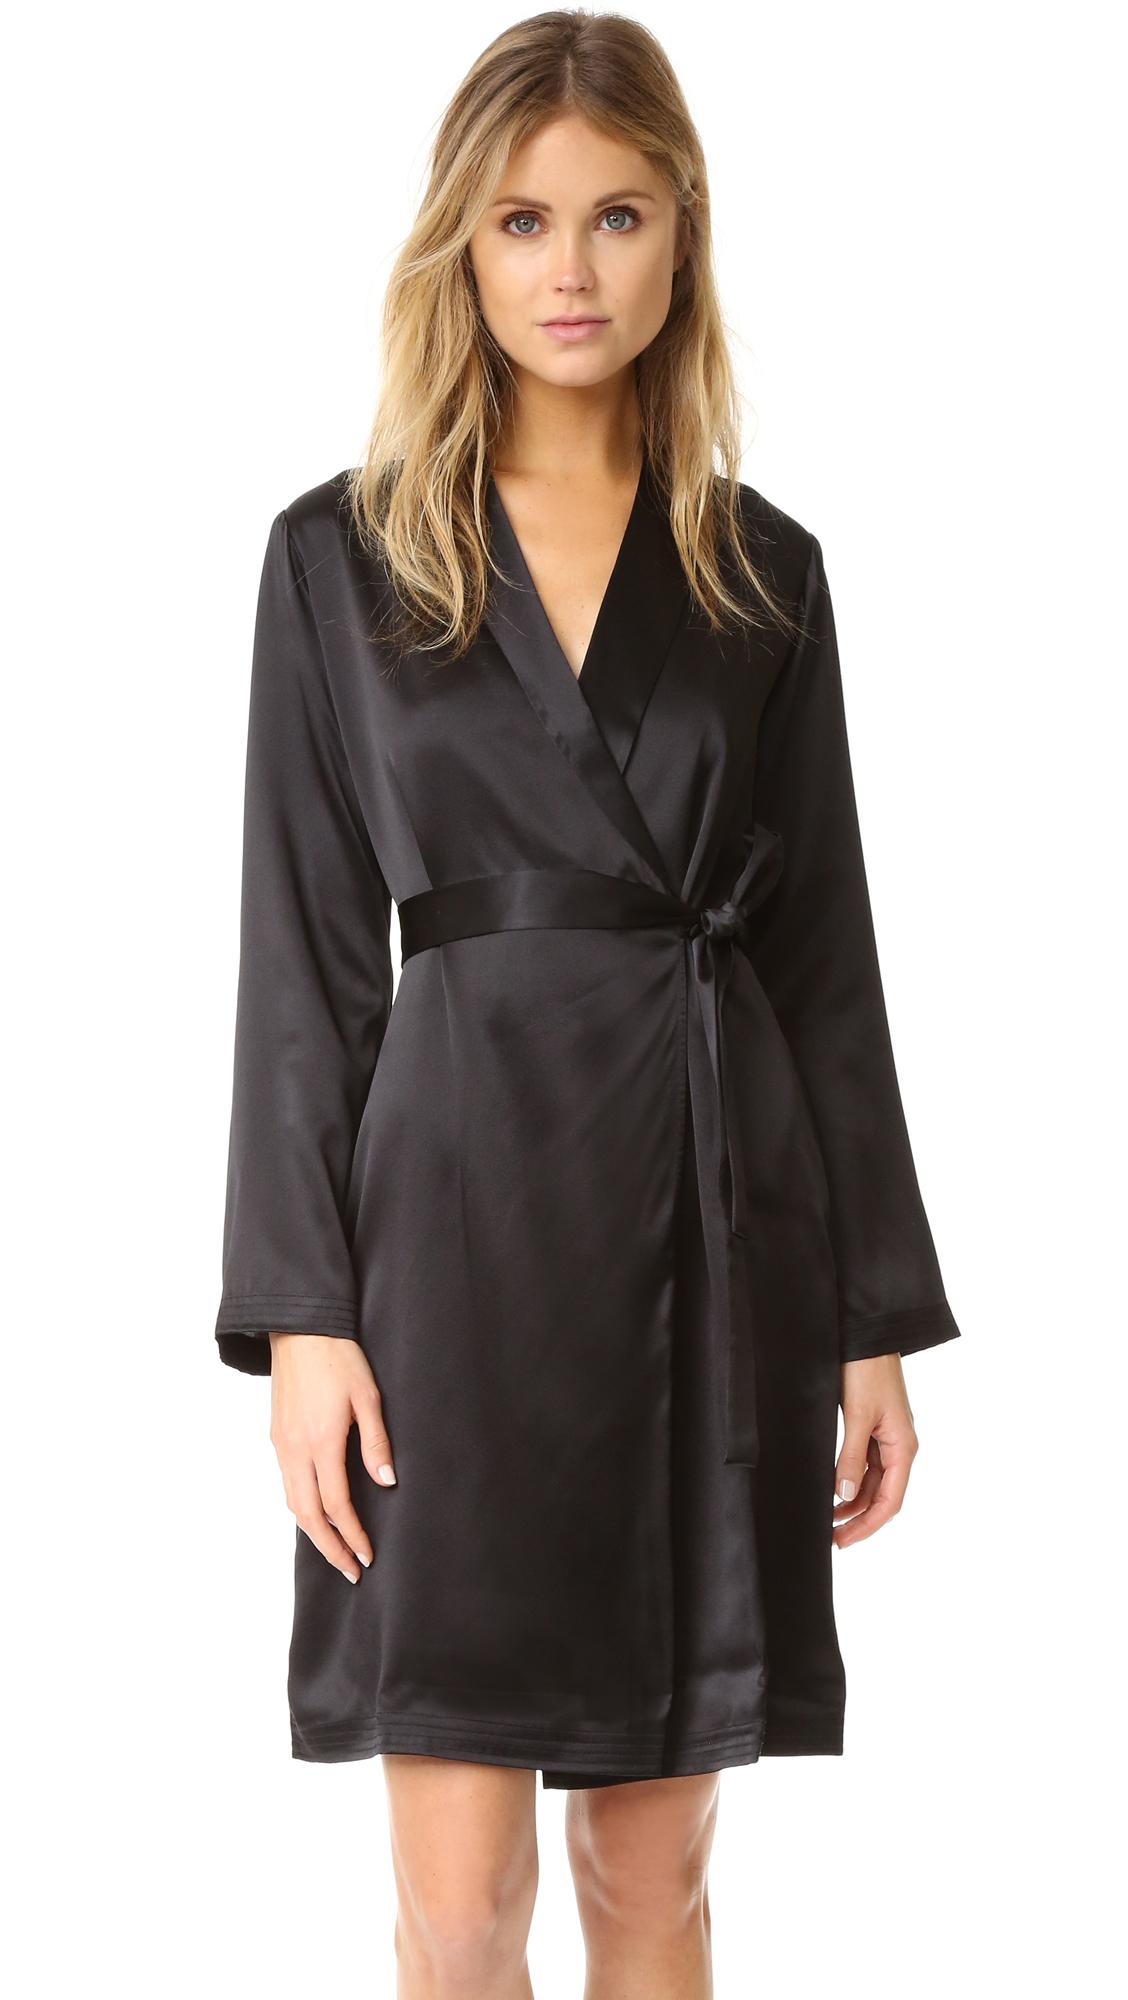 Lyst - La perla Silk Short Robe in Black